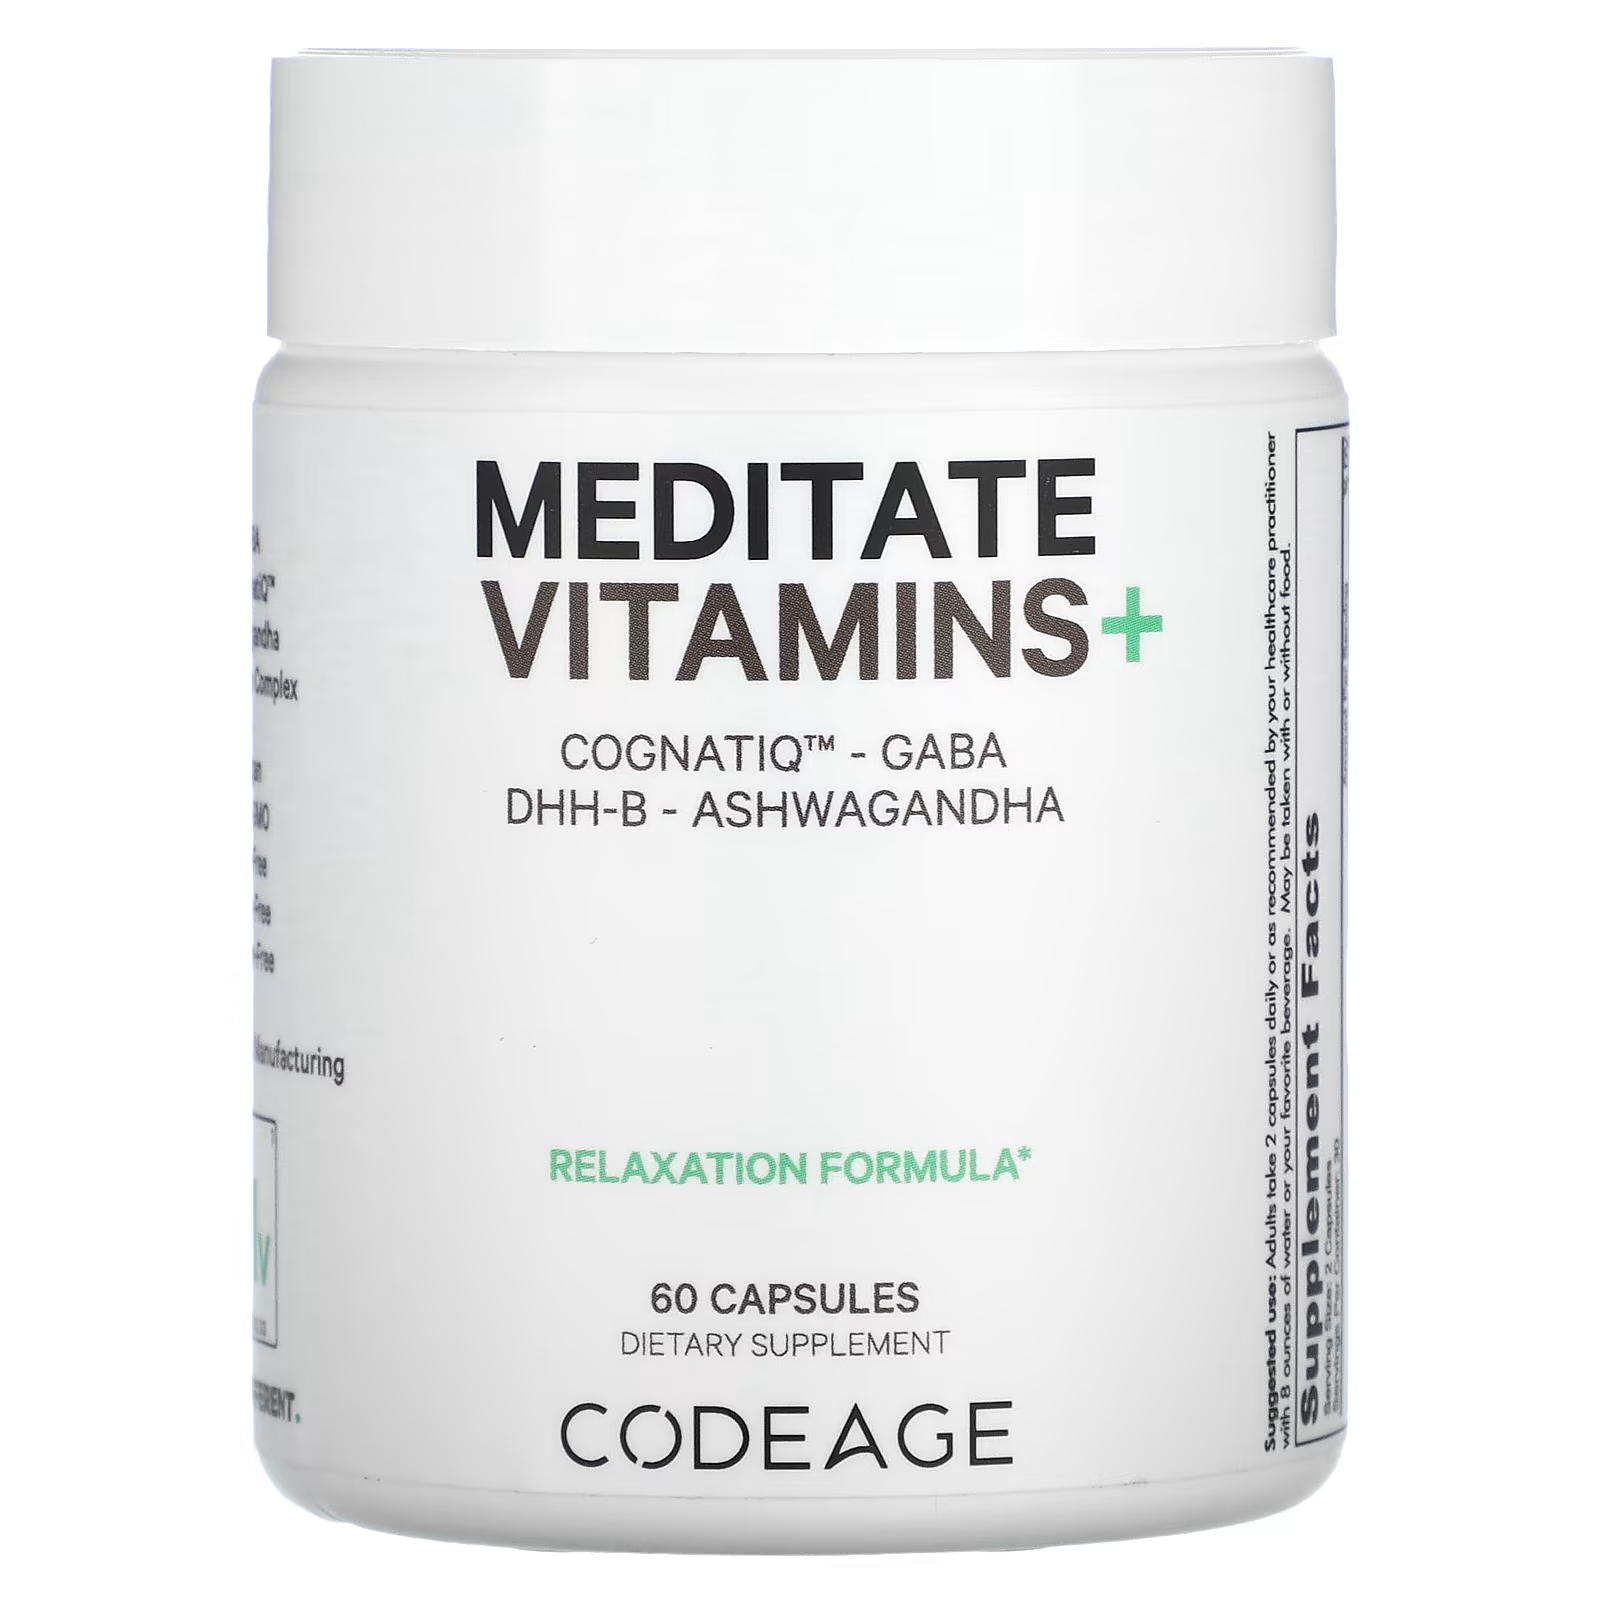 Codeage Meditate Витамины+ CognatiQ GABA DHH-B Ашваганда 60 капсул витамины clearface для подростков codeage 60 капсул